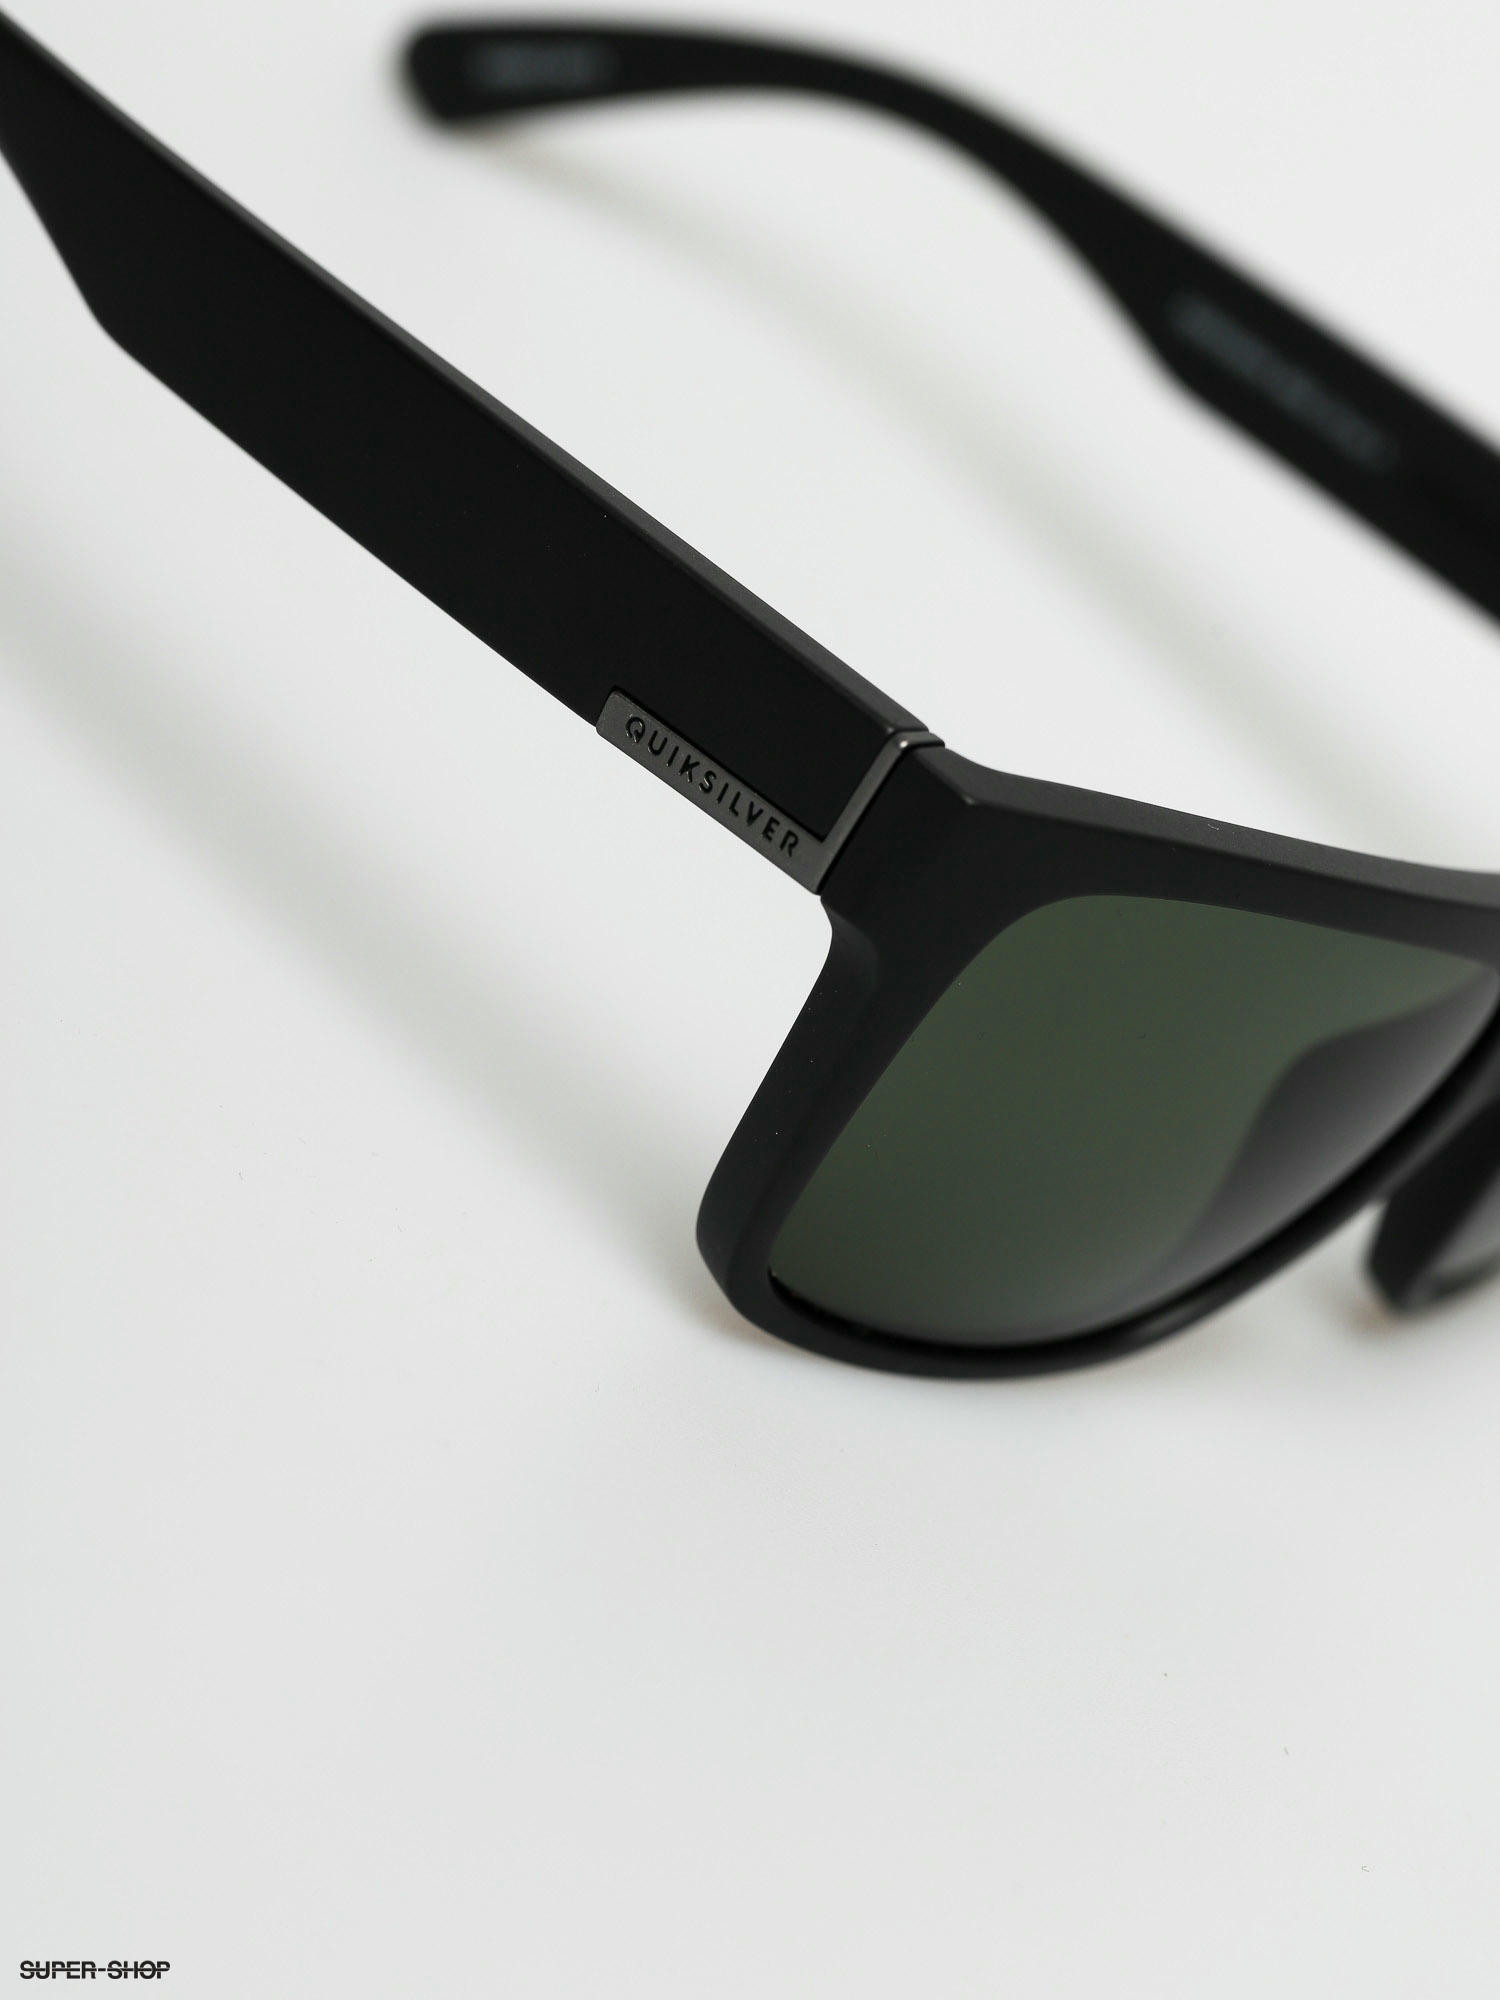 Sunglasses (matte p) black/green Quiksilver Polarized Bruiser